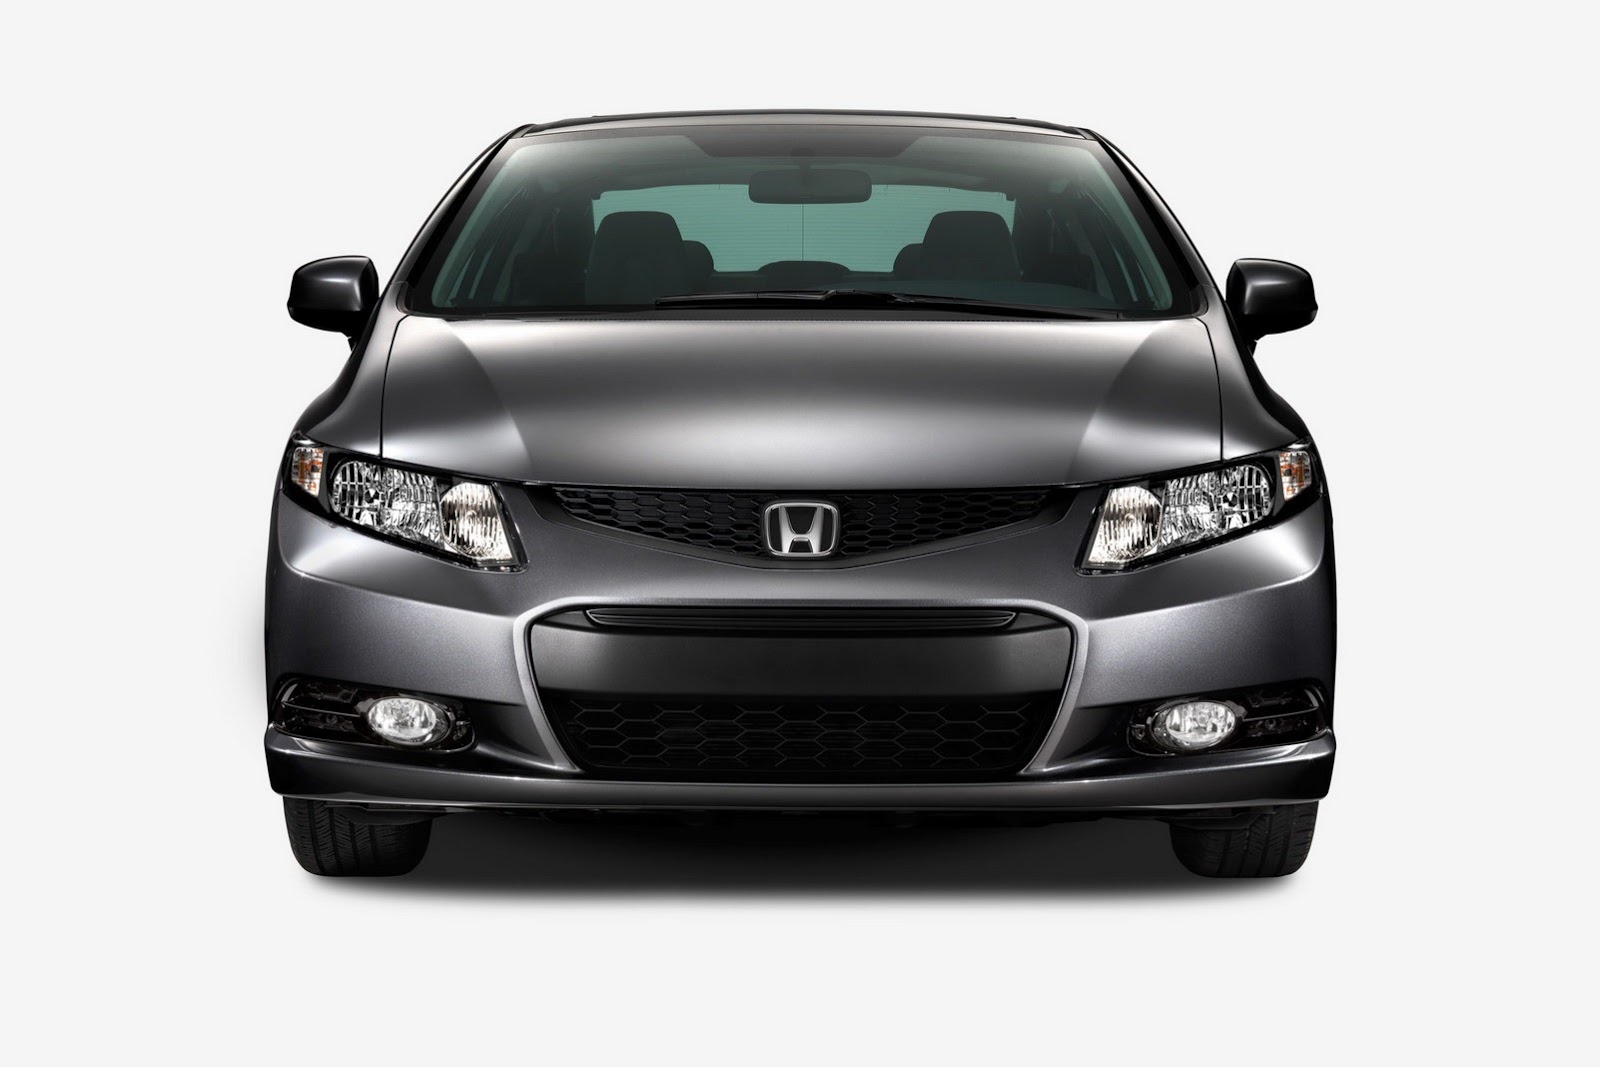 Honda Civic HD Wallpaper In Cars Imageci